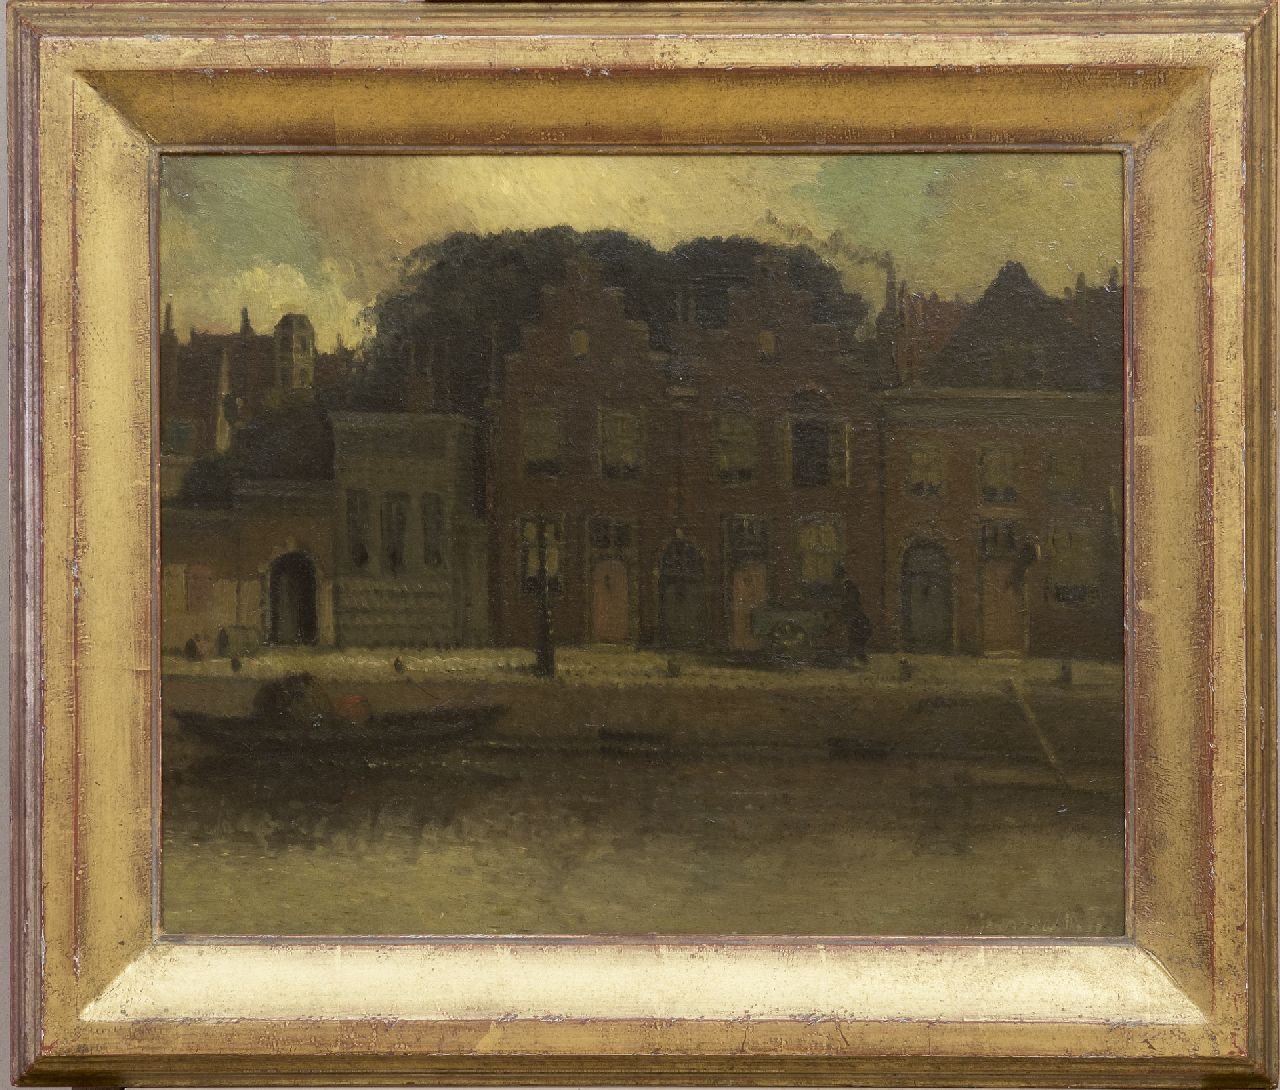 Daalhoff H.A. van | Hermanus Antonius 'Henri' van Daalhoff | Paintings offered for sale | Houses along the quay, oil on panel 37.7 x 46.0 cm, signed l.r.